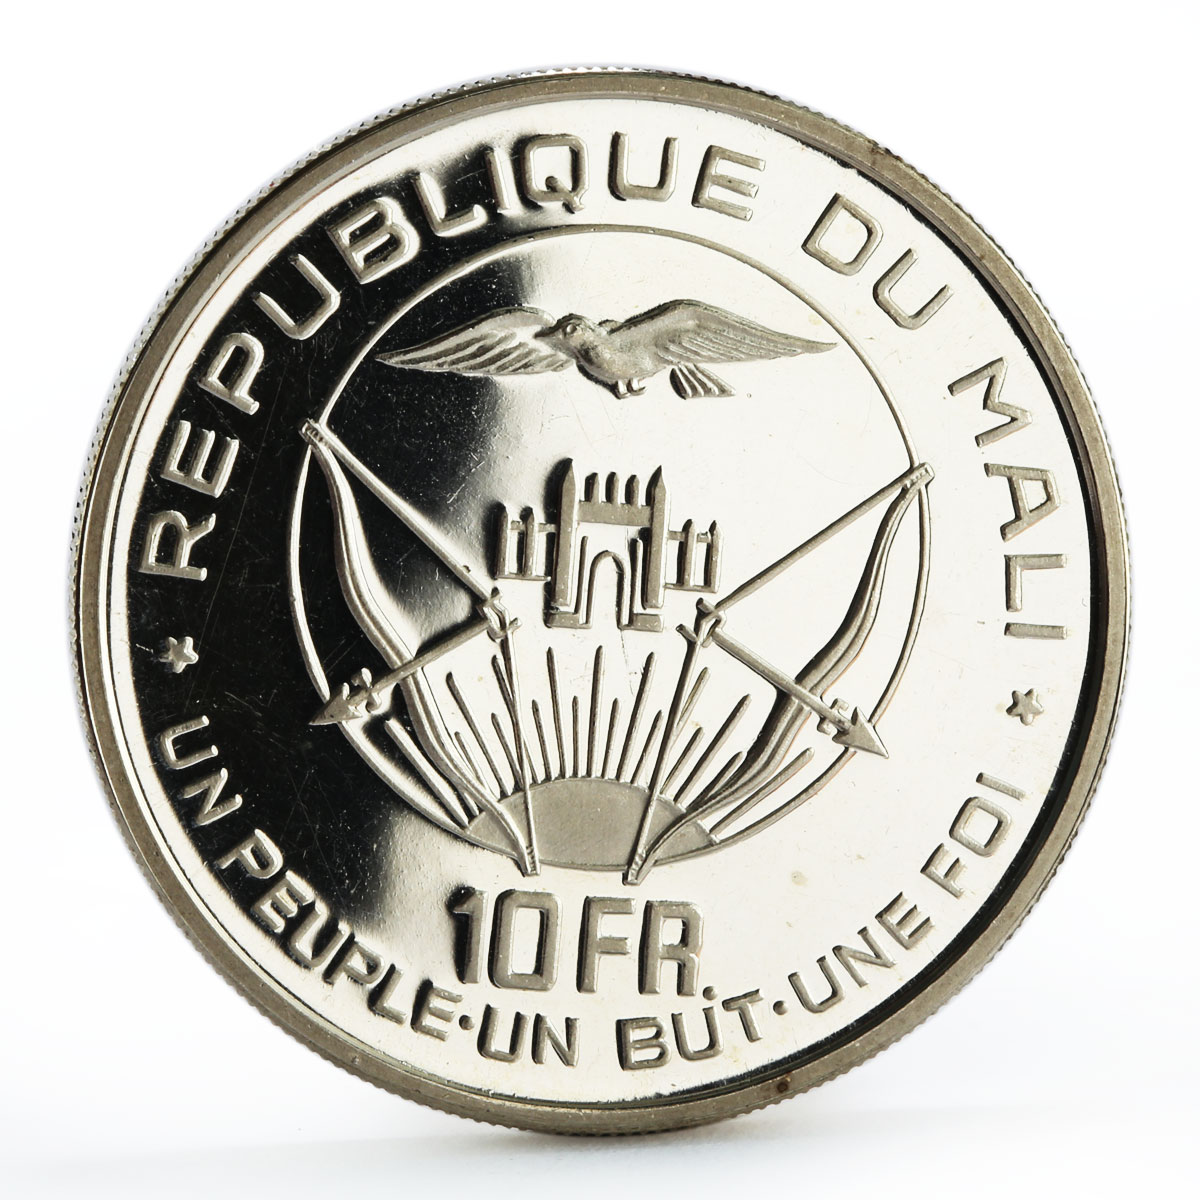 Mali 10 francs President Modibo Keita Independence proof silver coin 1960